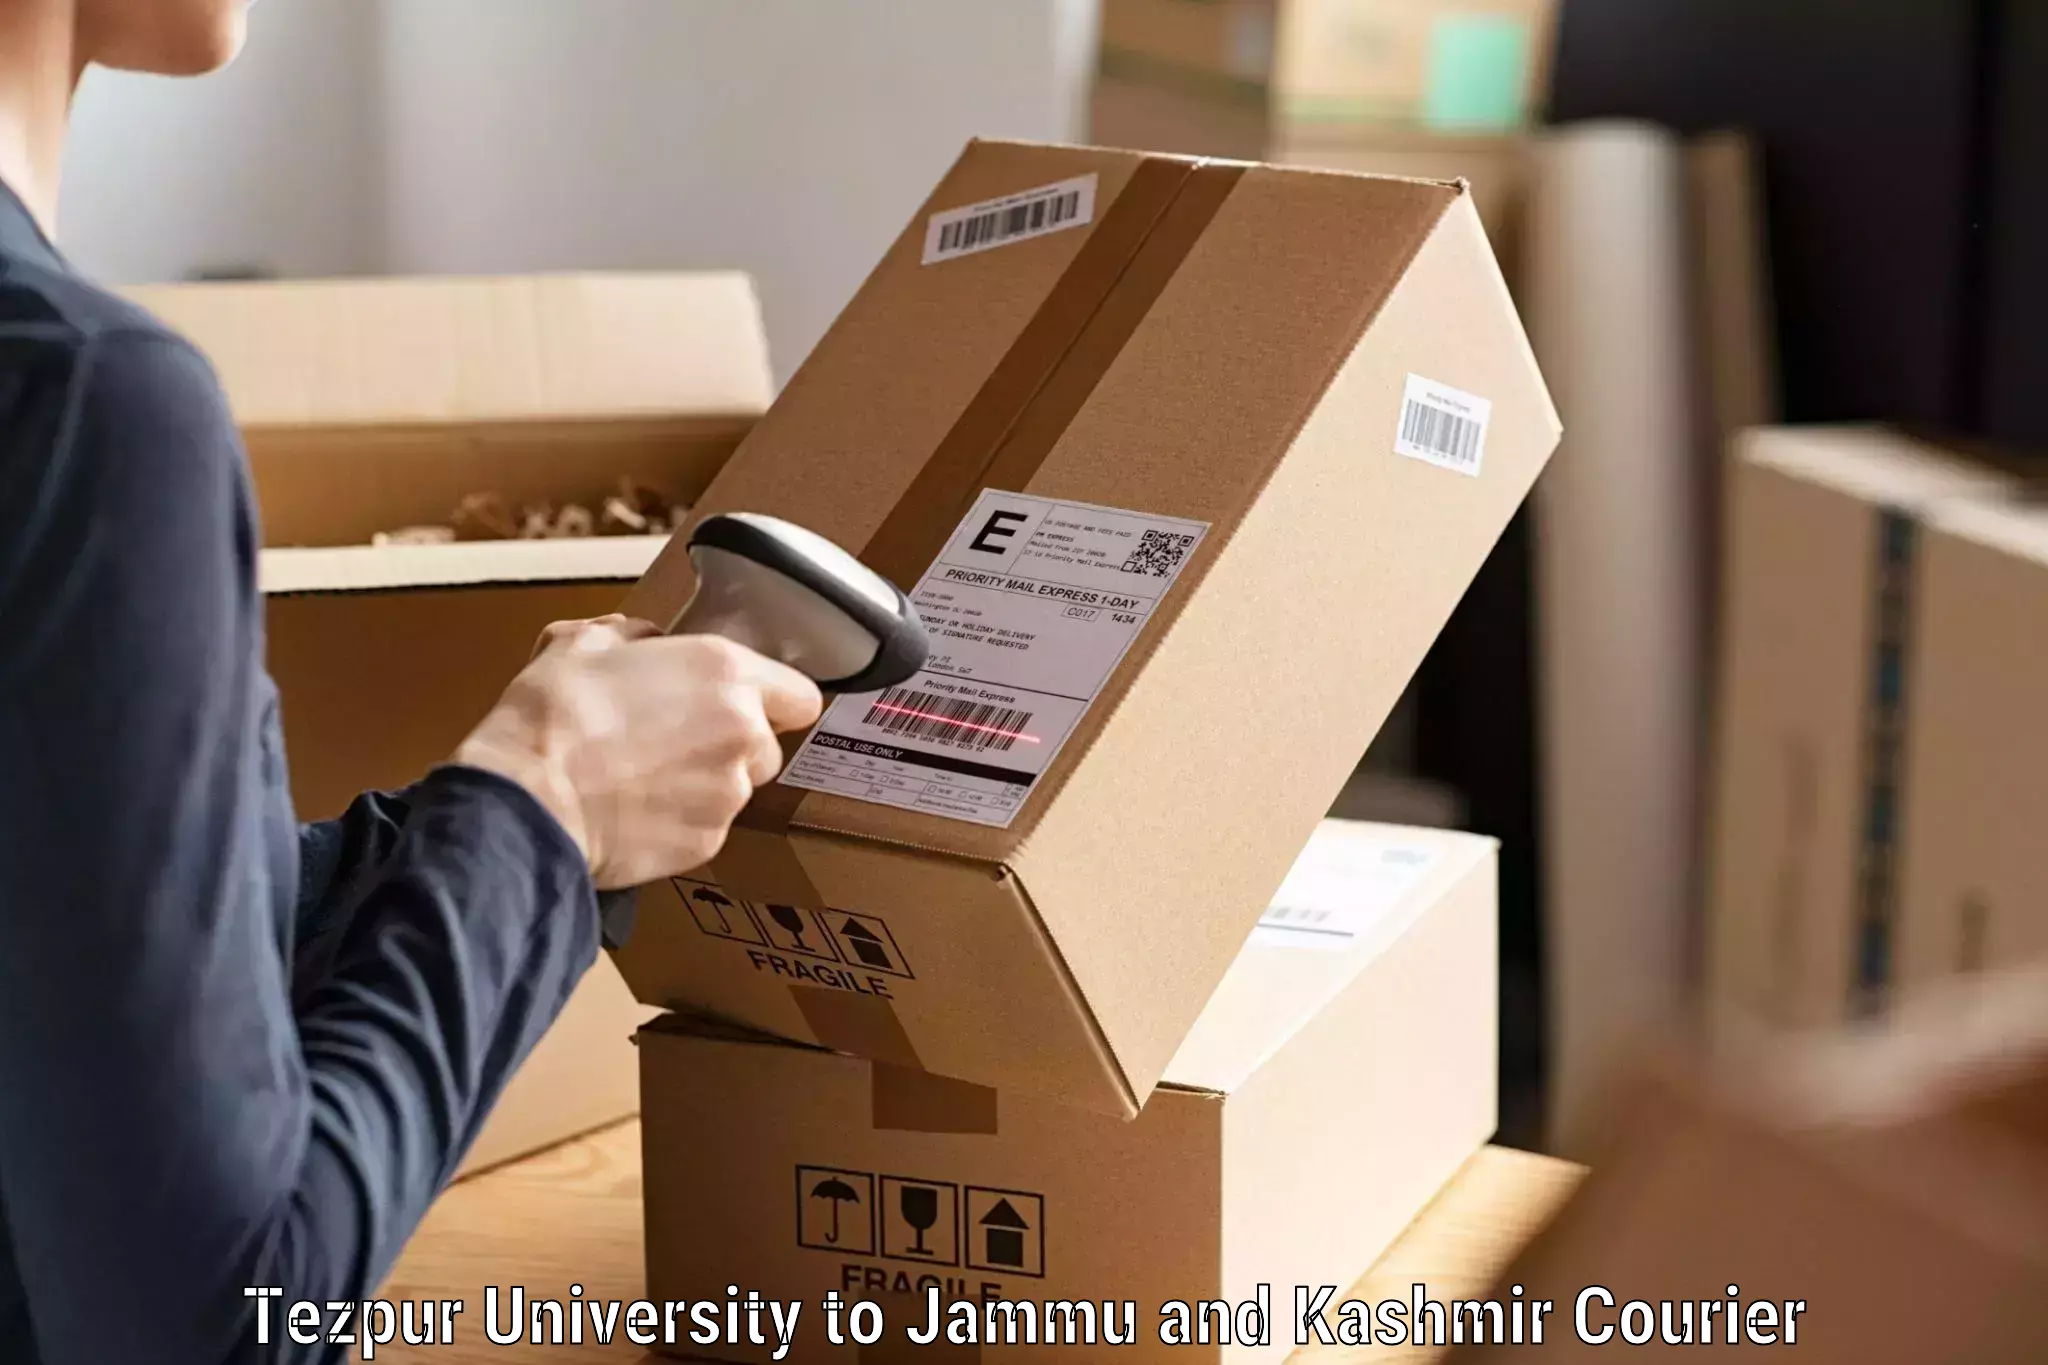 Express package handling Tezpur University to Srinagar Kashmir